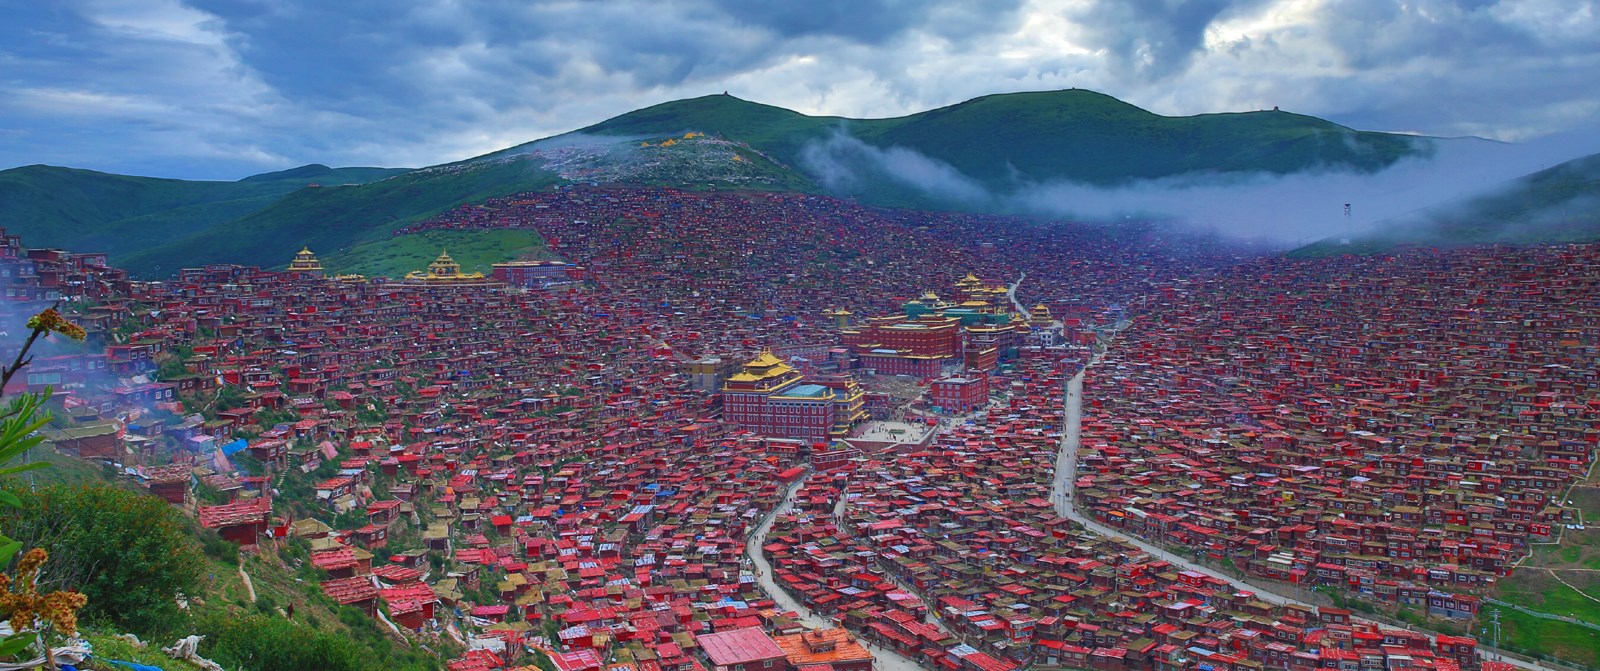 China Rental Car Tour to East Tibet Kham and Amdo